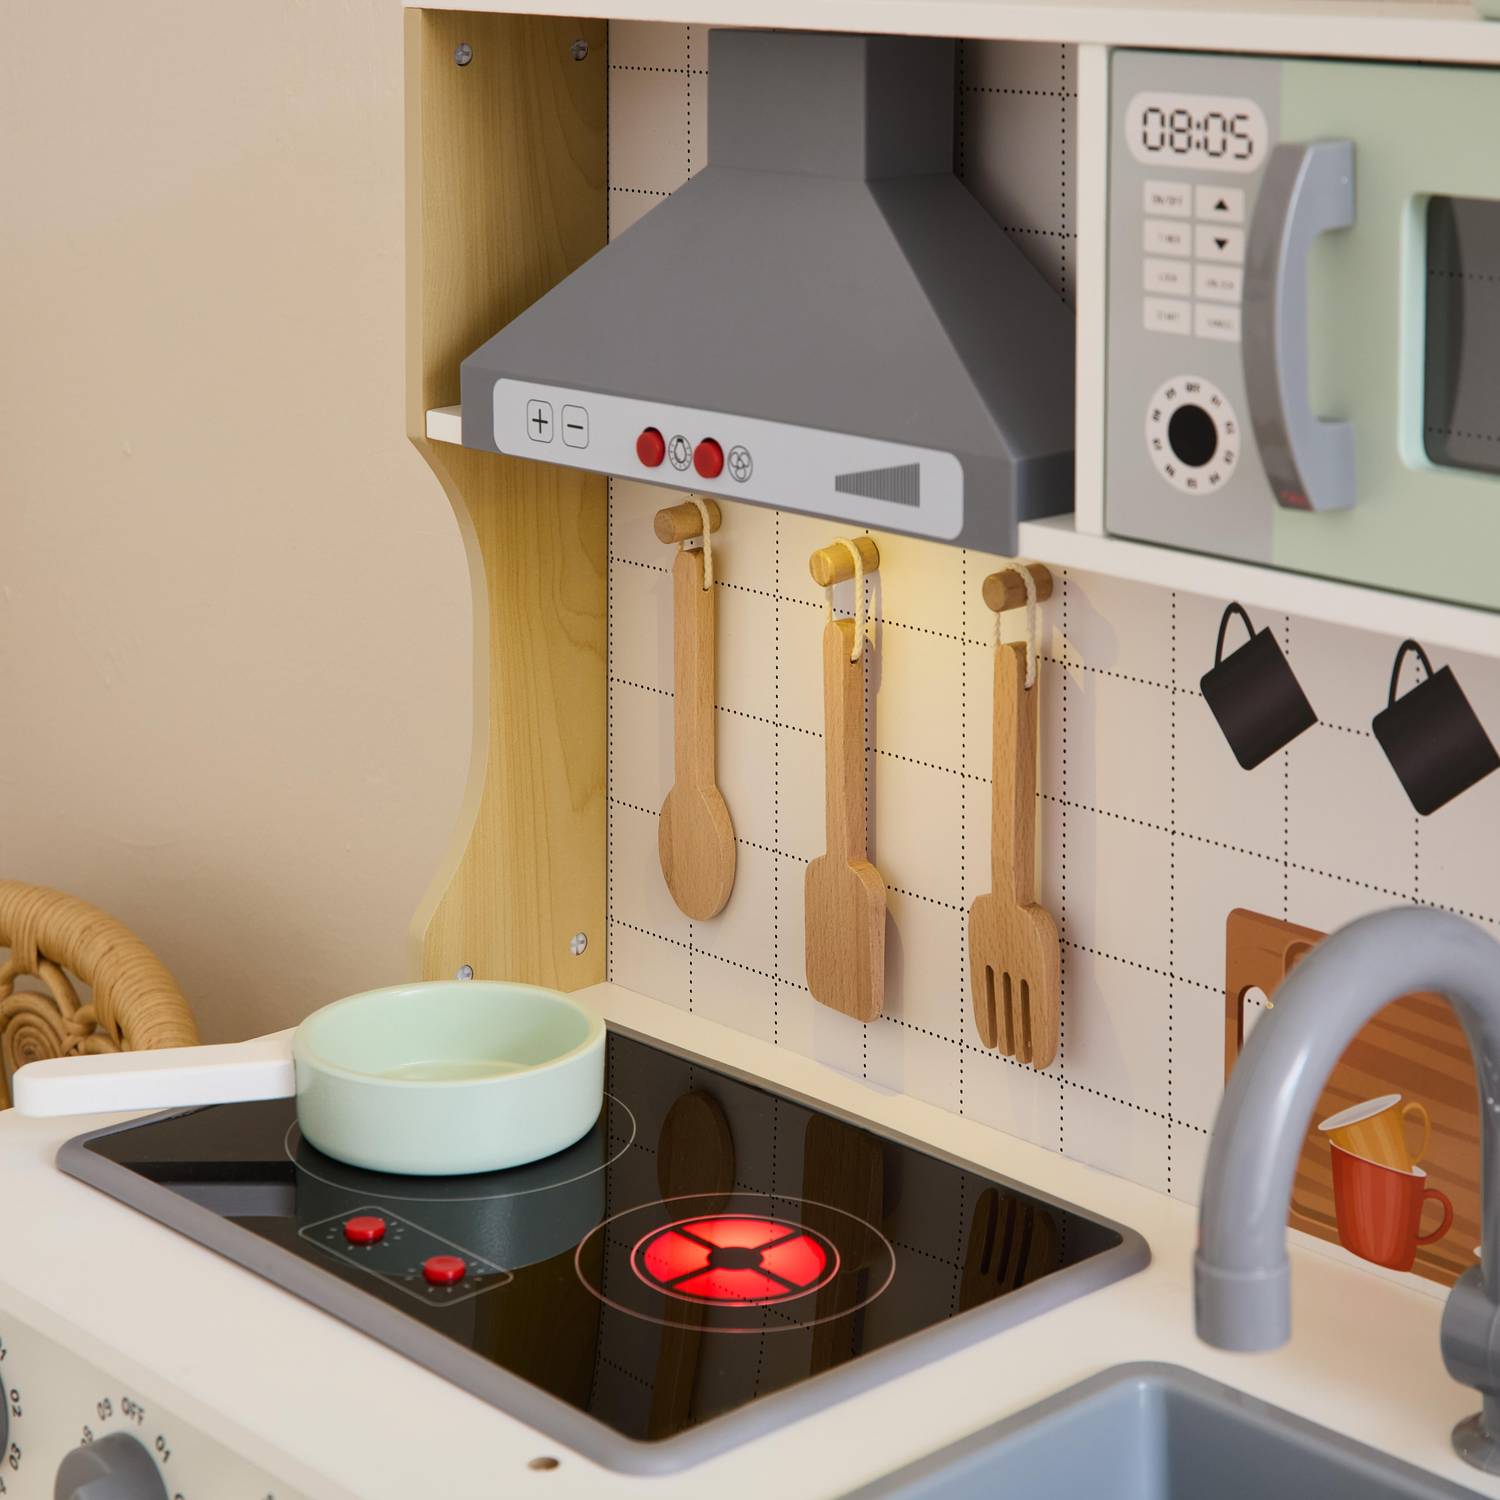 Panel de cocina infantil, accesorios incluidos, campana, placa de cocción, microondas electrónico Photo5